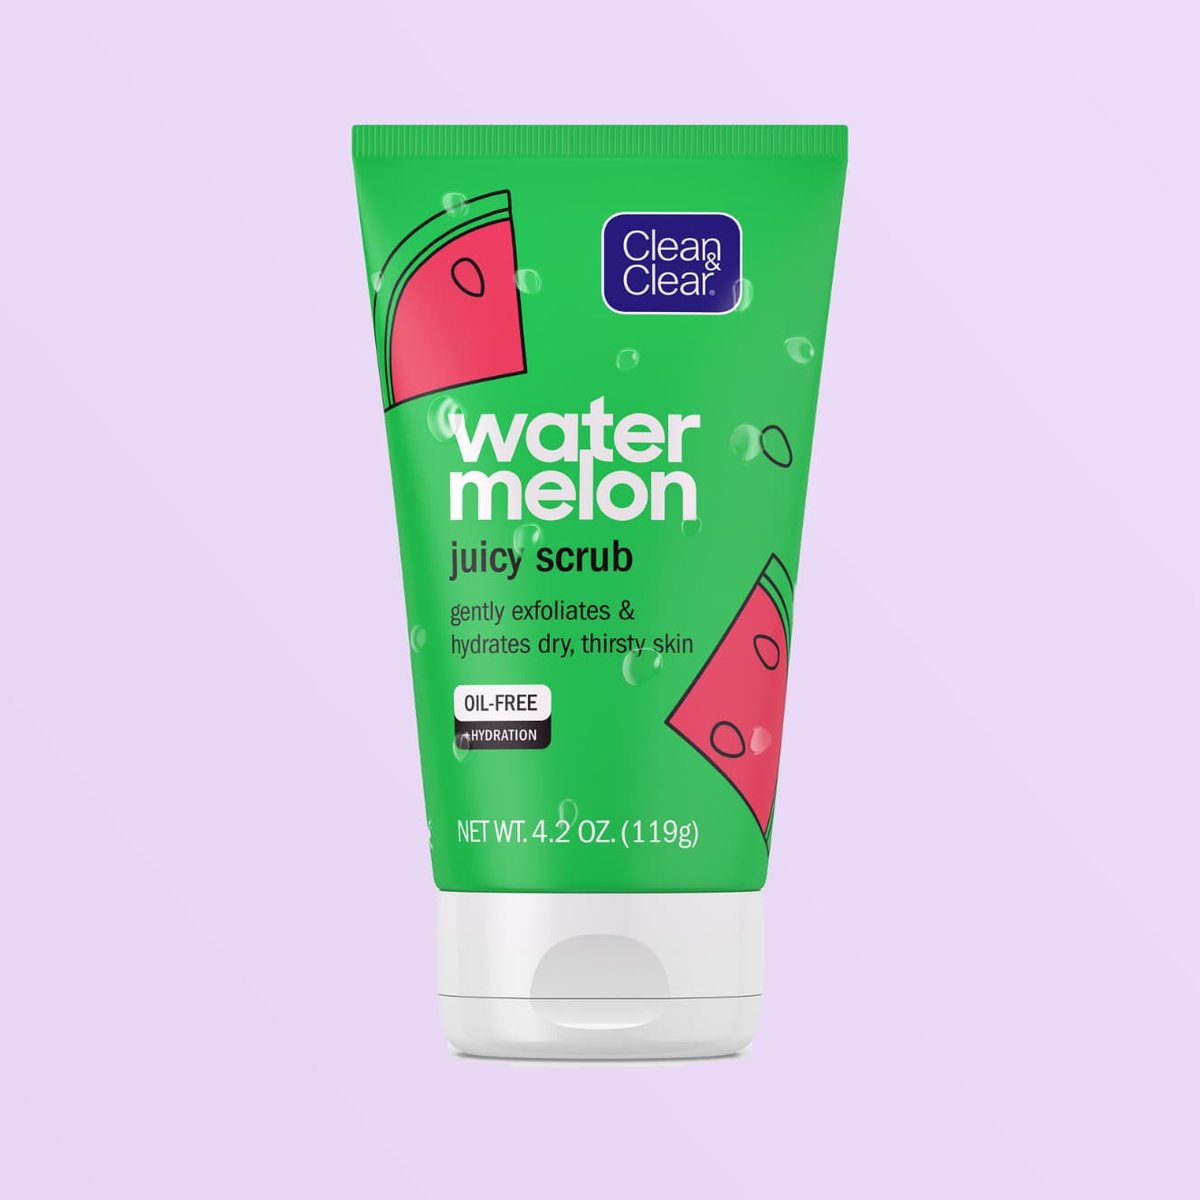 Clean & Clear Watermelon juicy scrub, oil free 4.2 fluid ounce green bottle with white cap